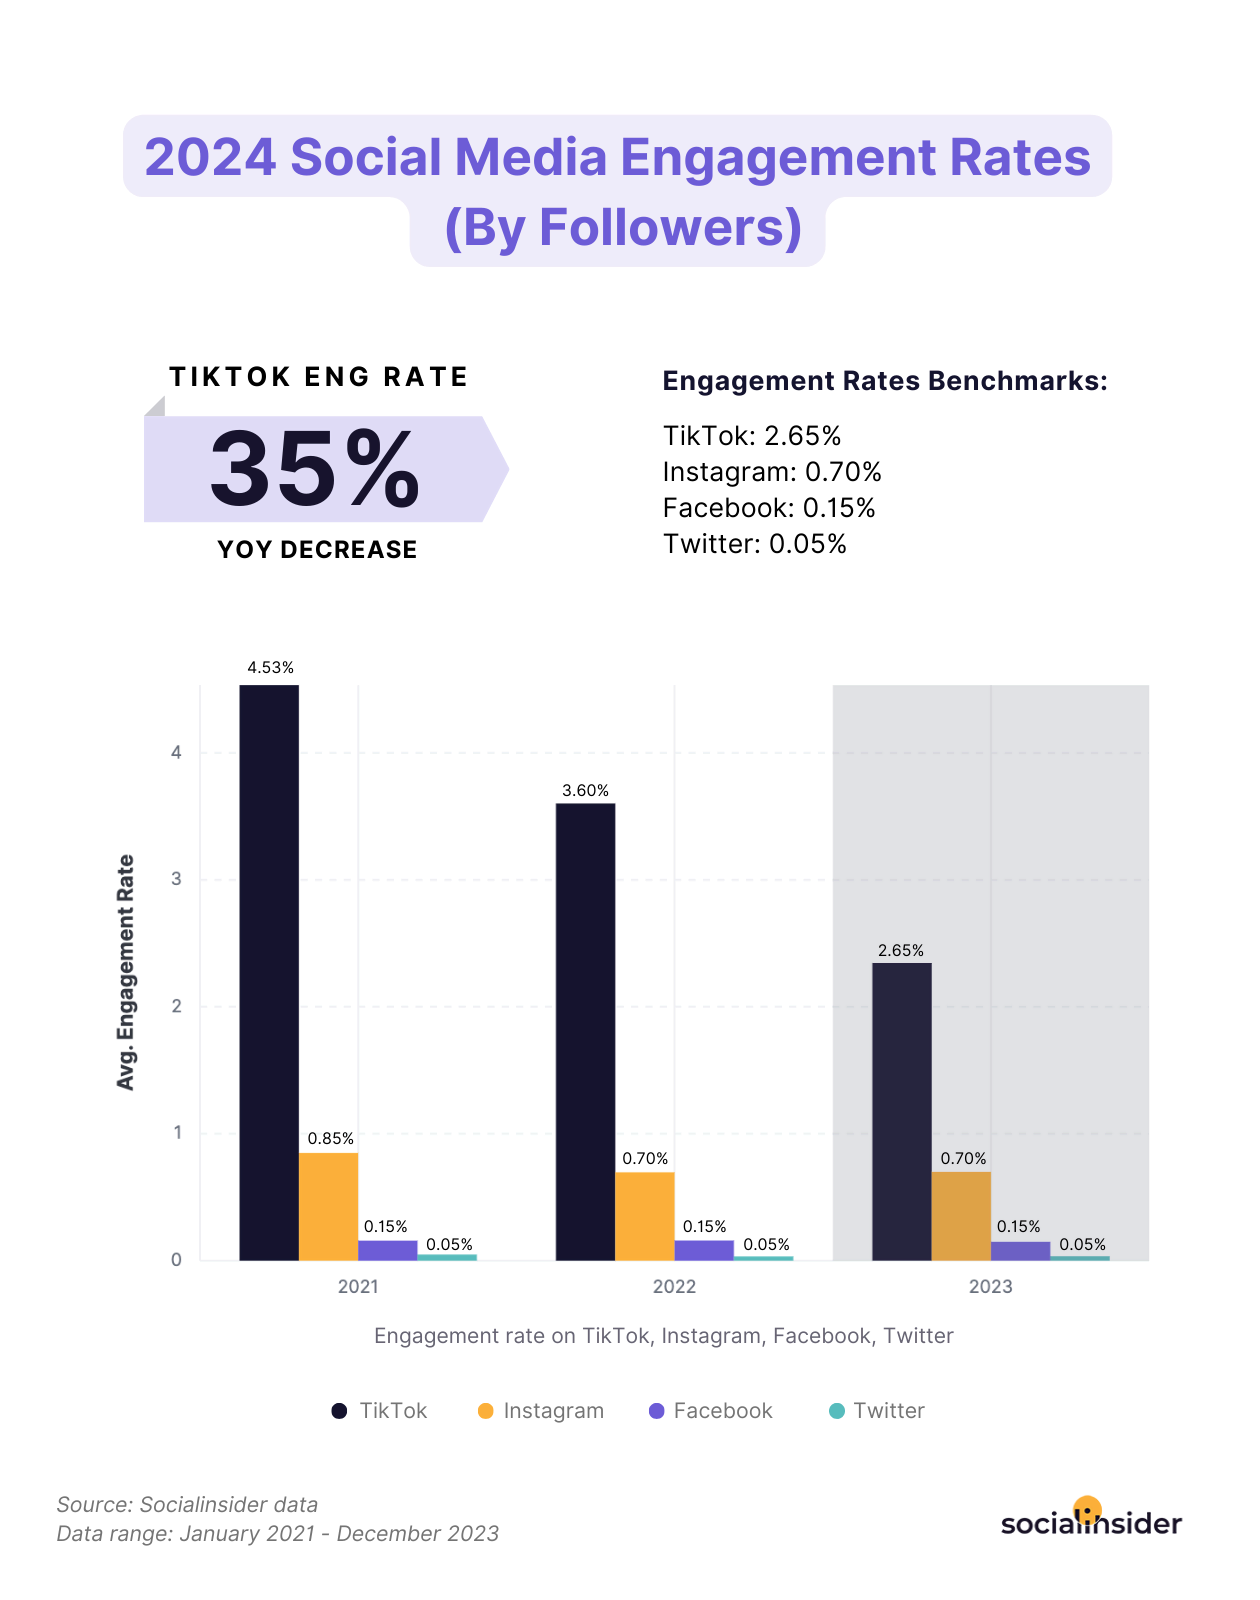 engagement rate benchmarks across the most popular social media platform